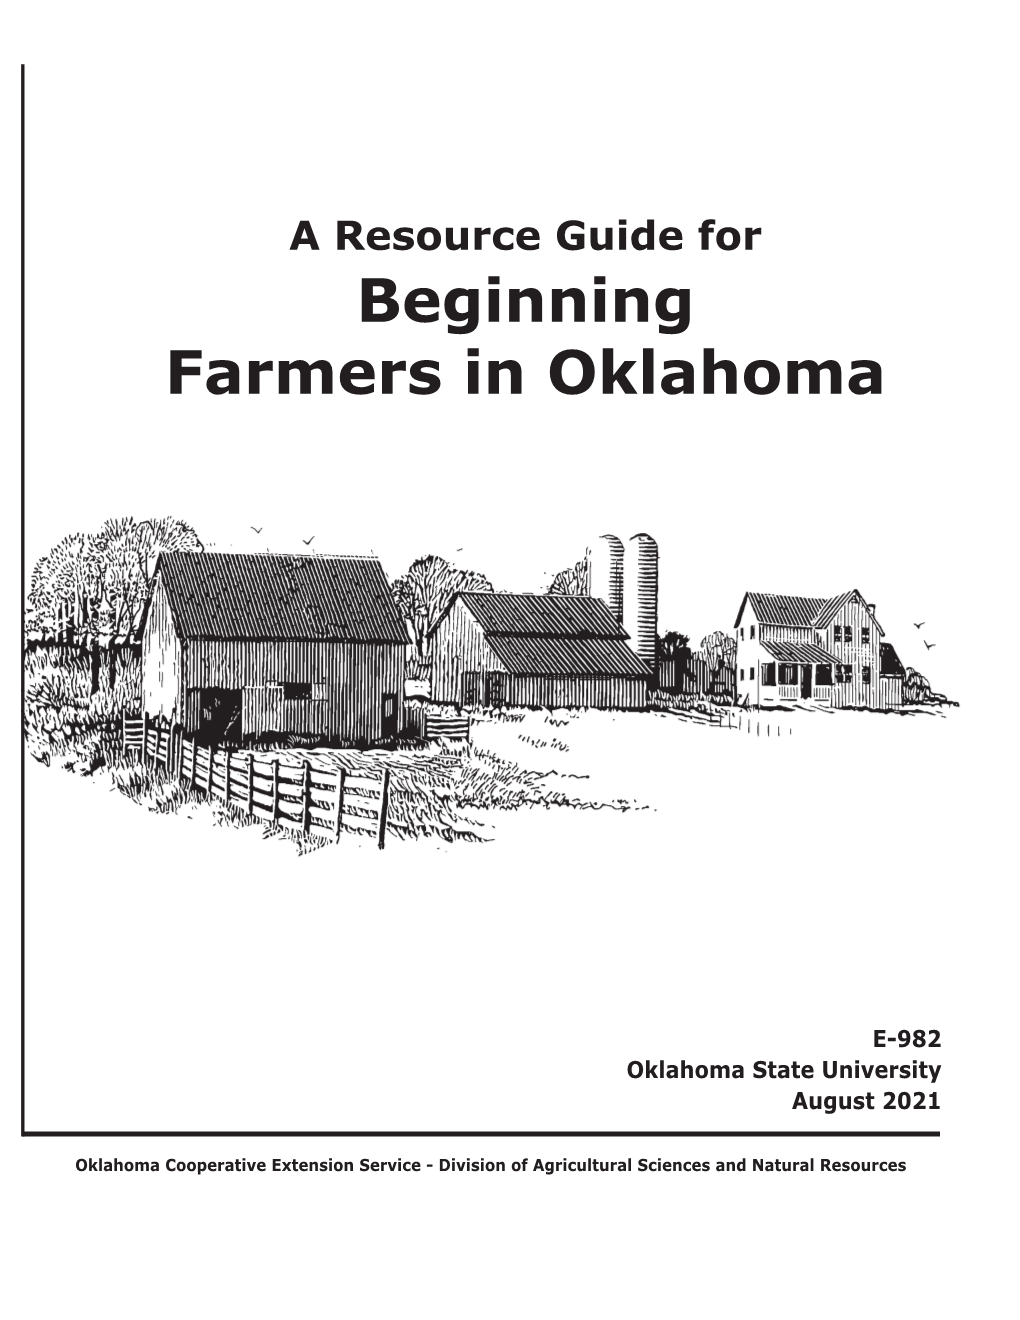 Beginning Farmers in Oklahoma